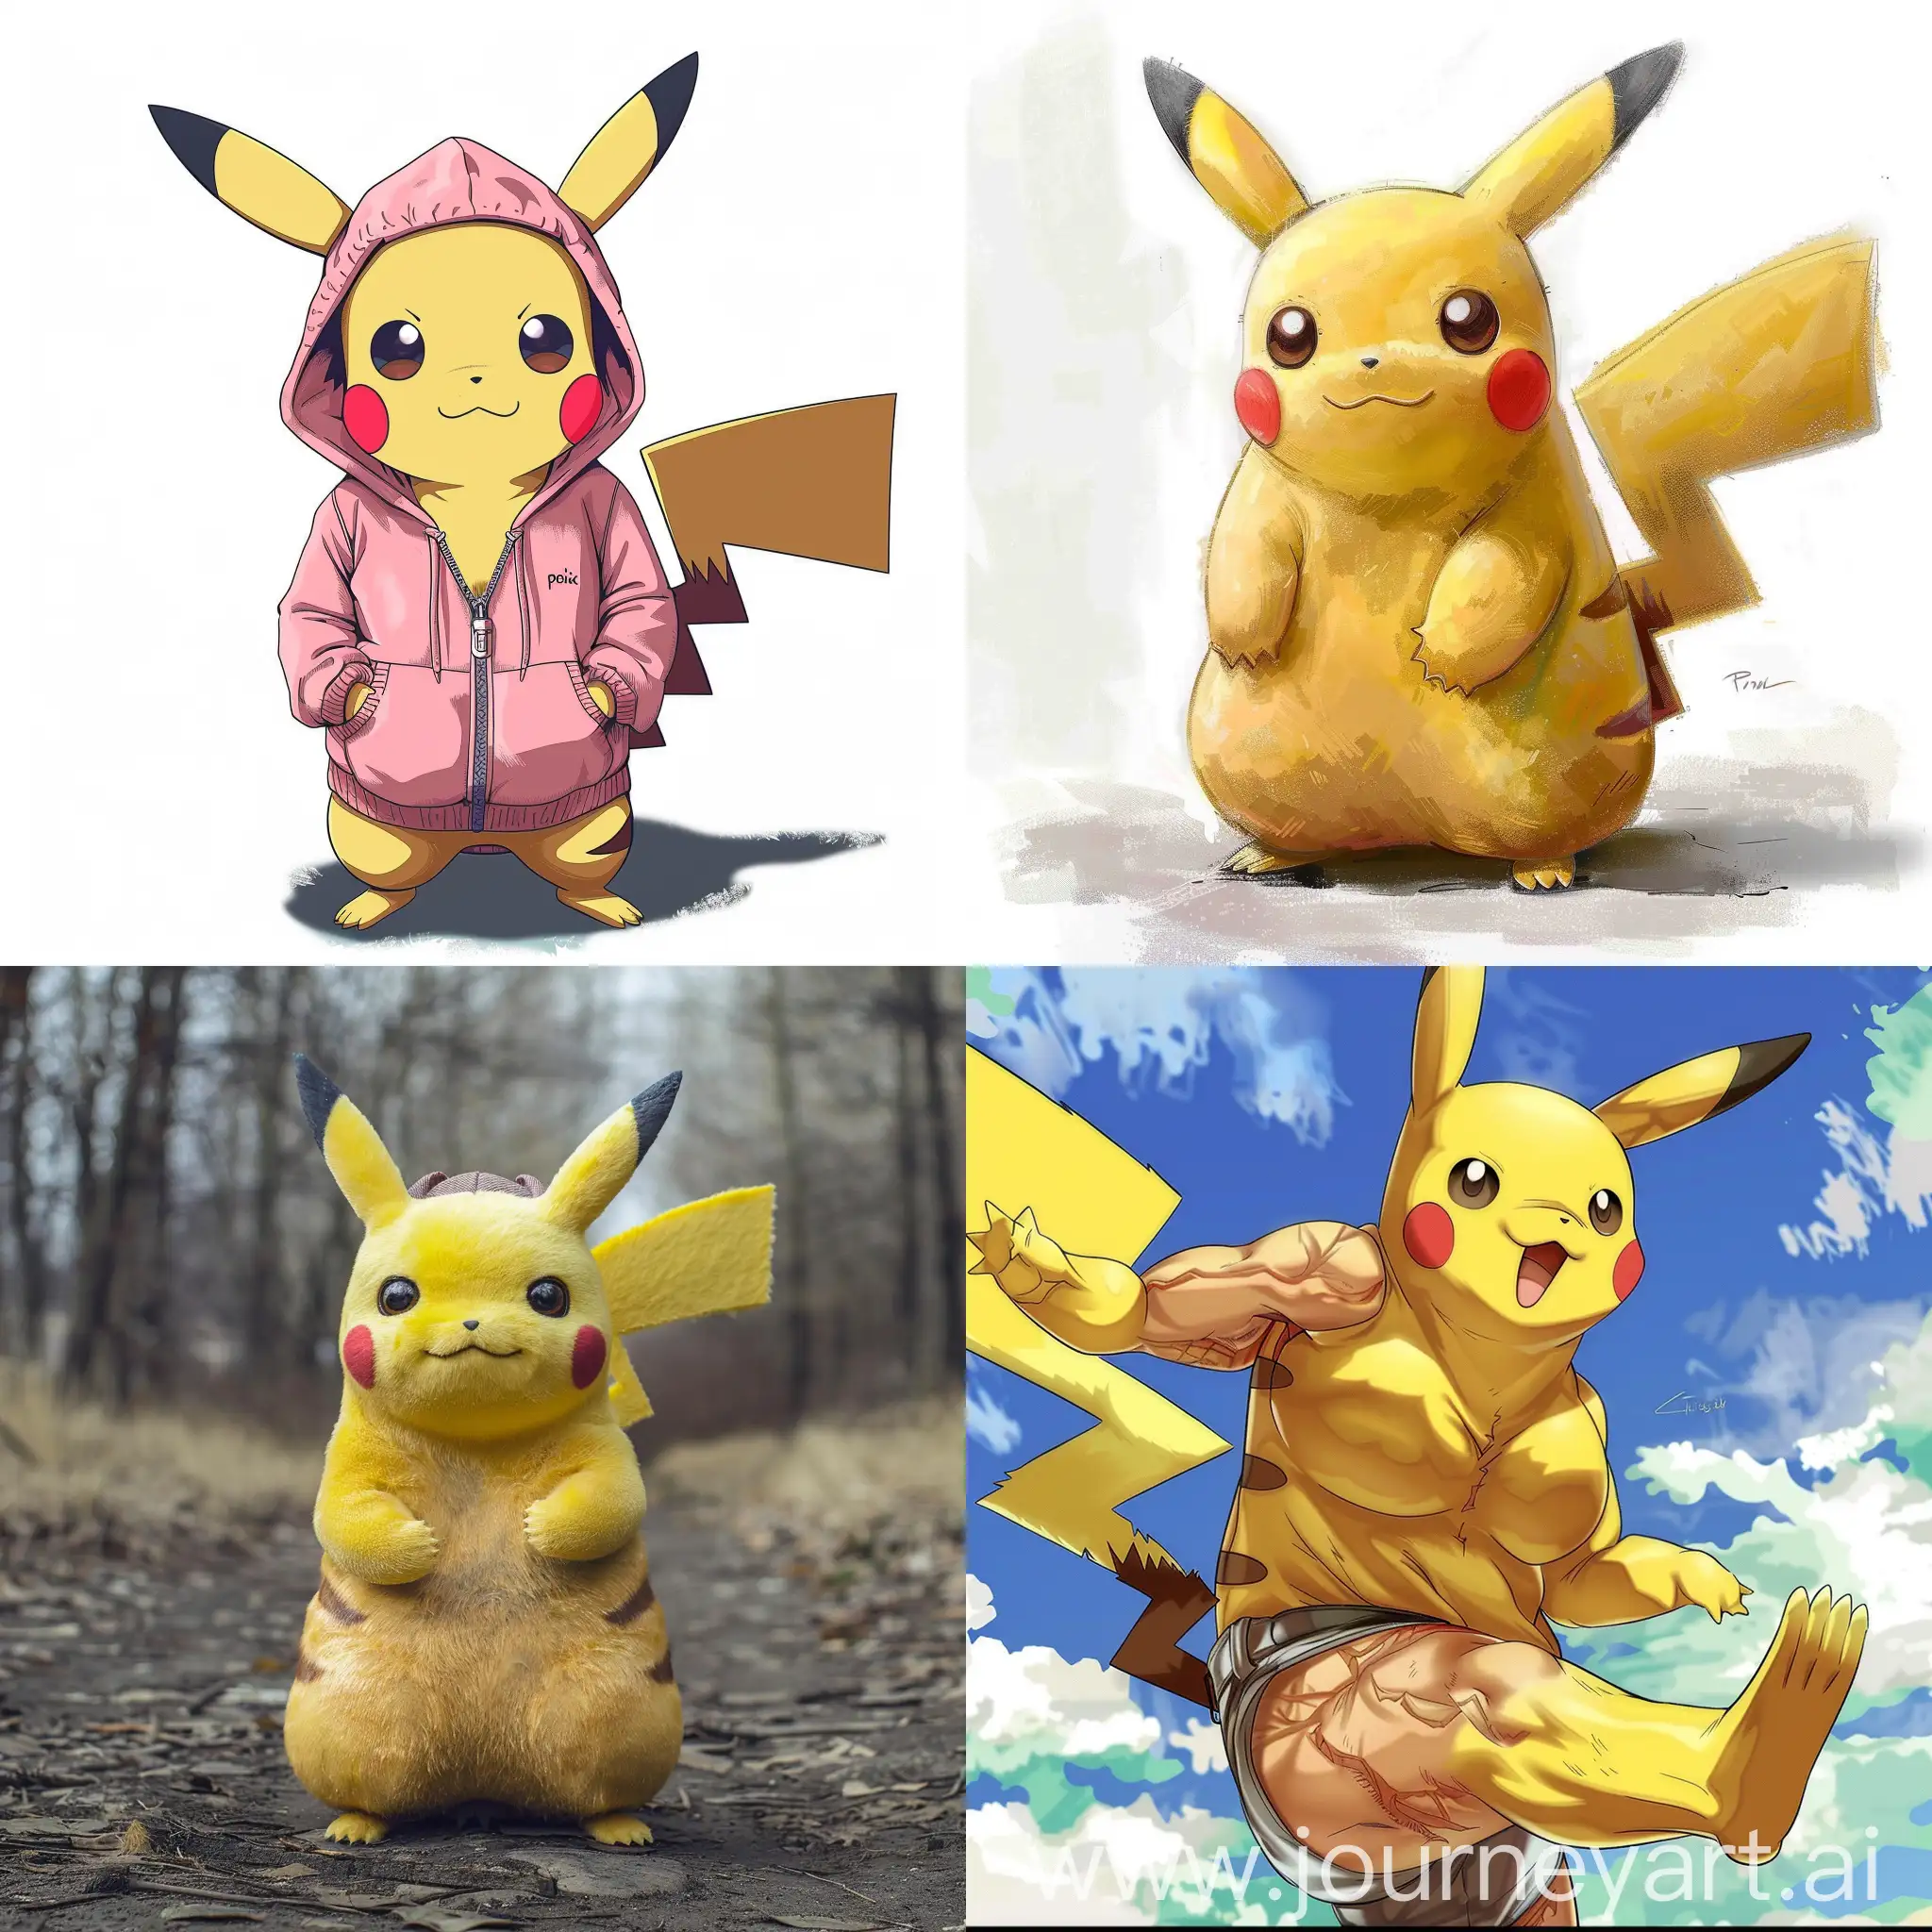 Pikachu as an human adult female